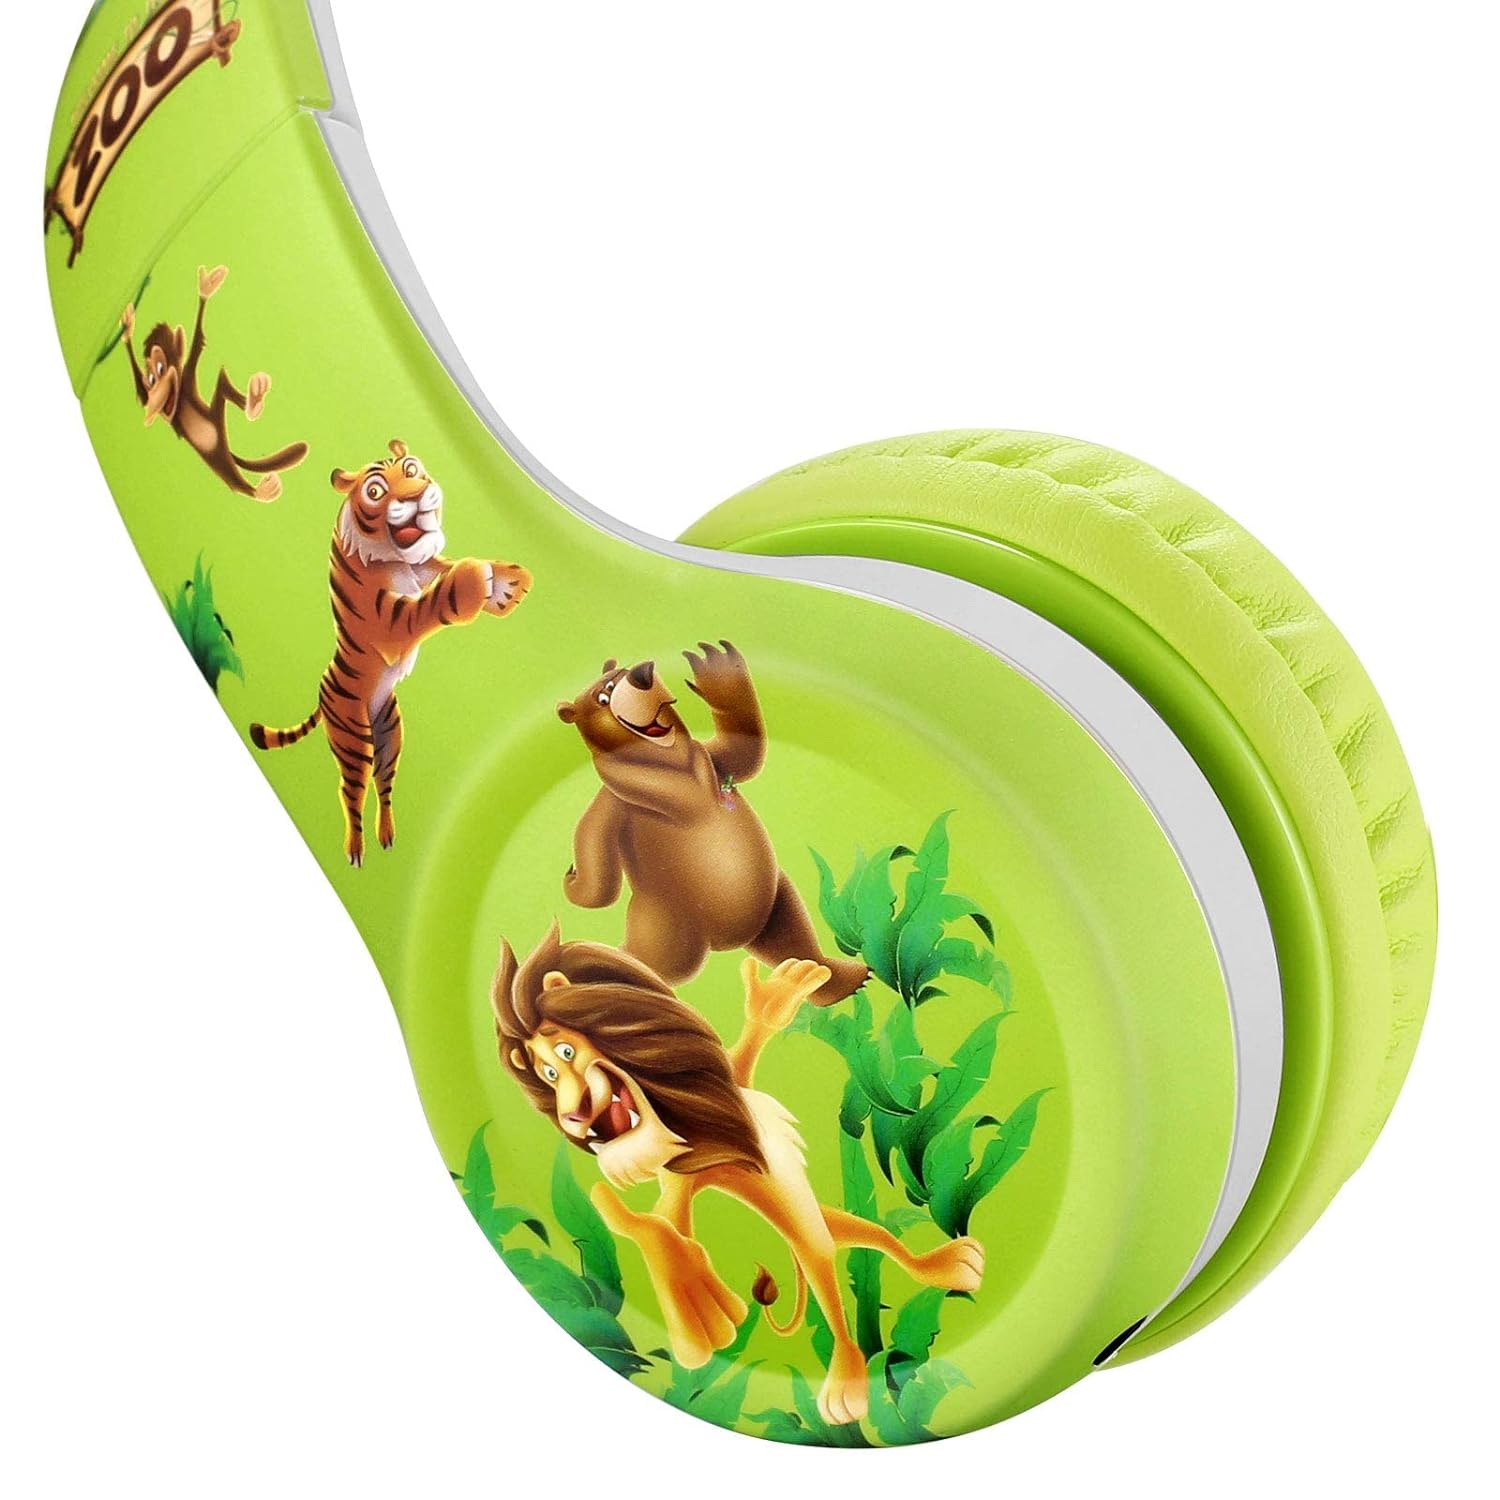 Nenos Kids Headphones Boys Headphones for Kids Over Ear, On Ear Headphones Limited Volume Headset for School, Travel, Computer (Zoo)